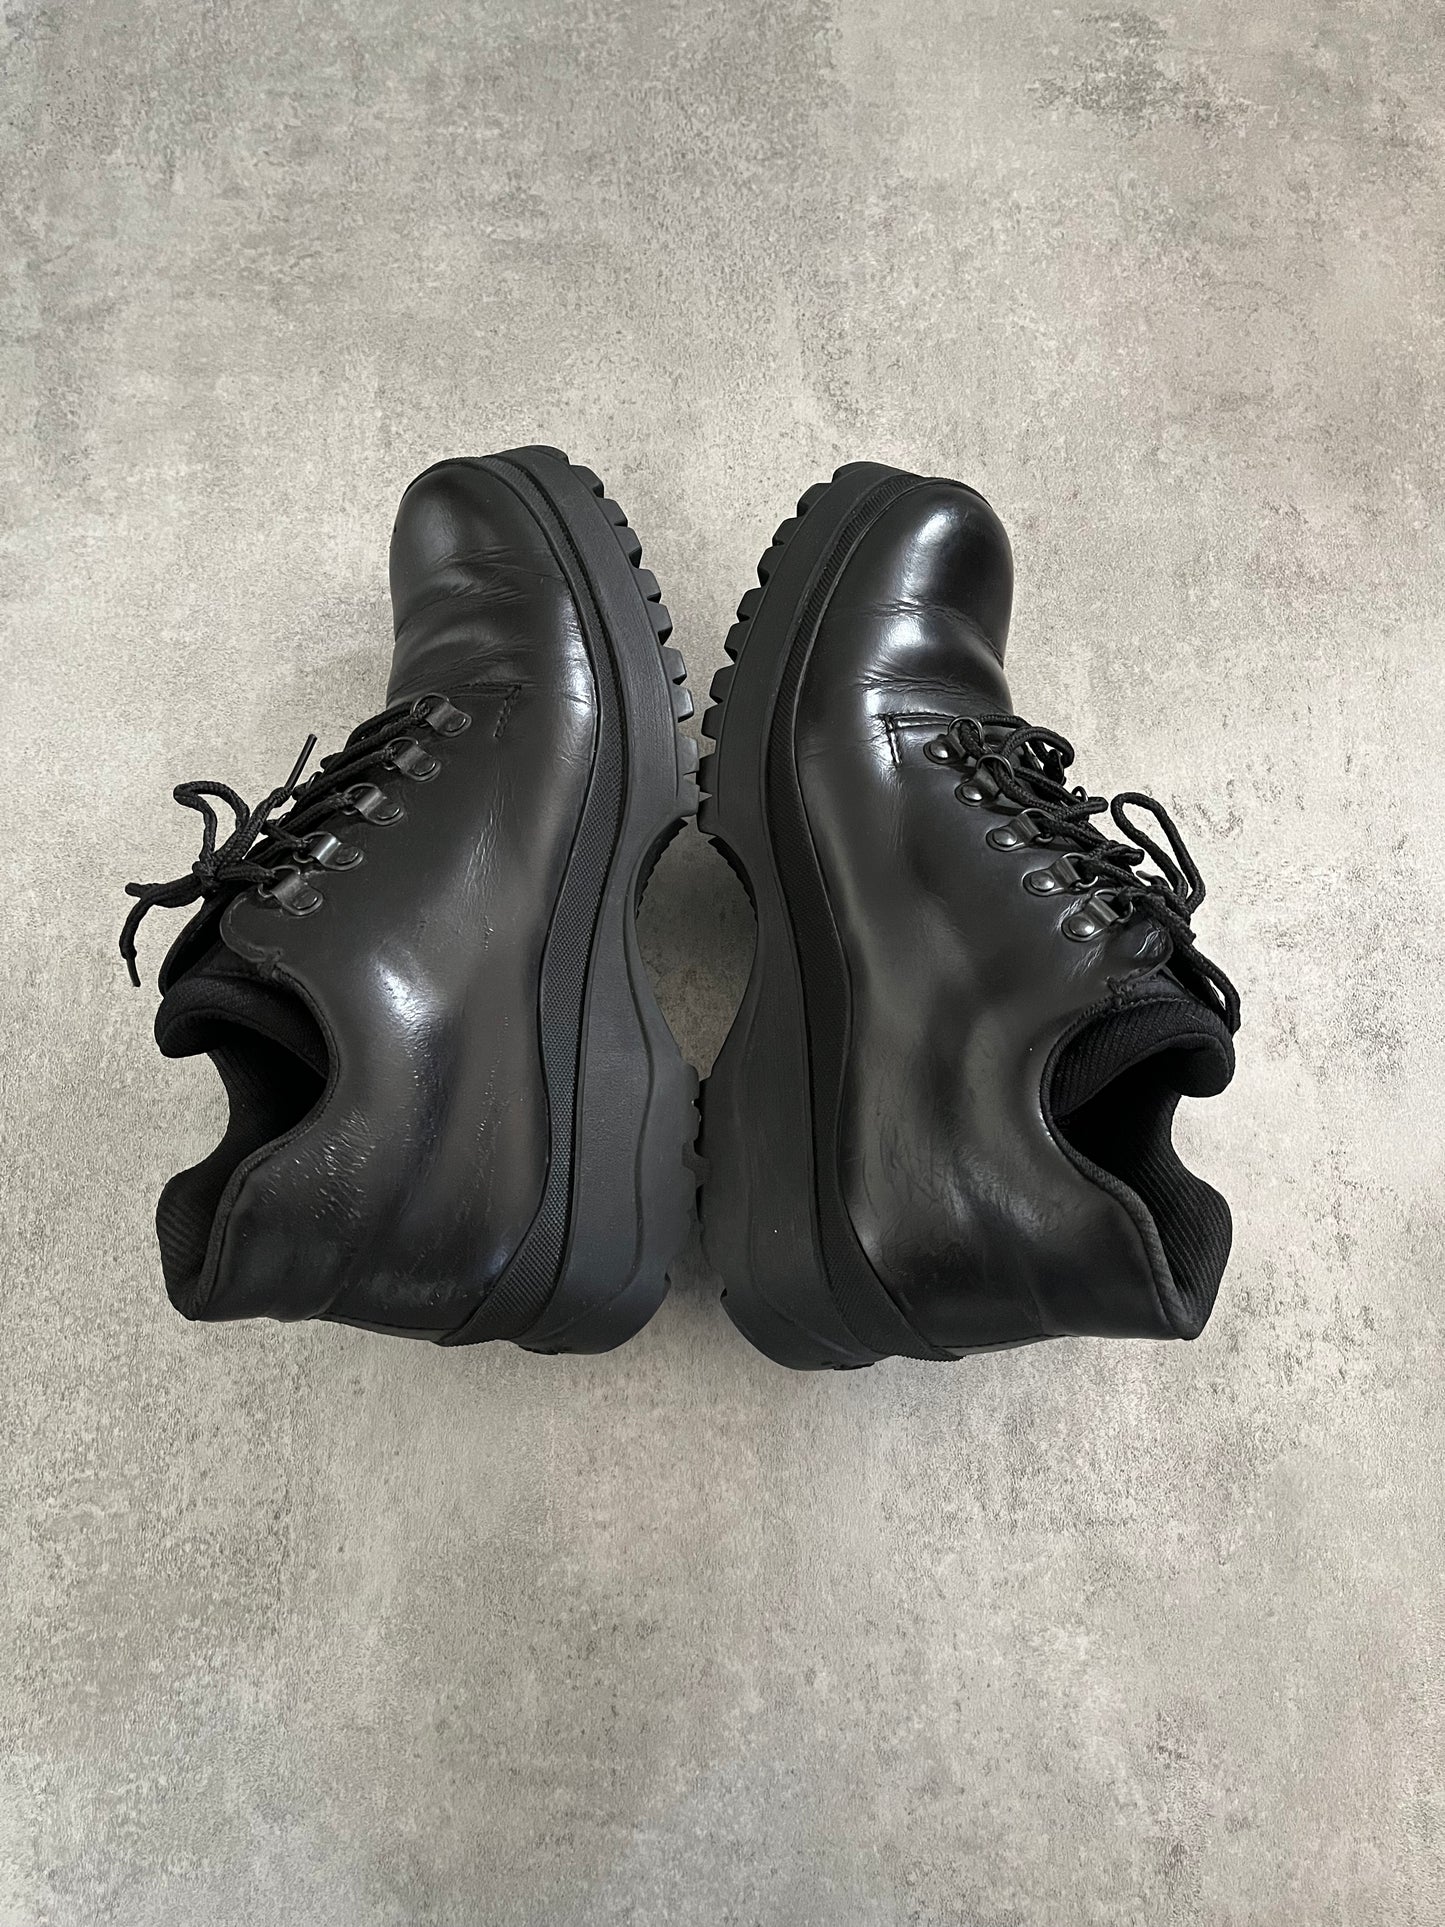 AW1999 Prada Vibram Leather Boots (41) - 2